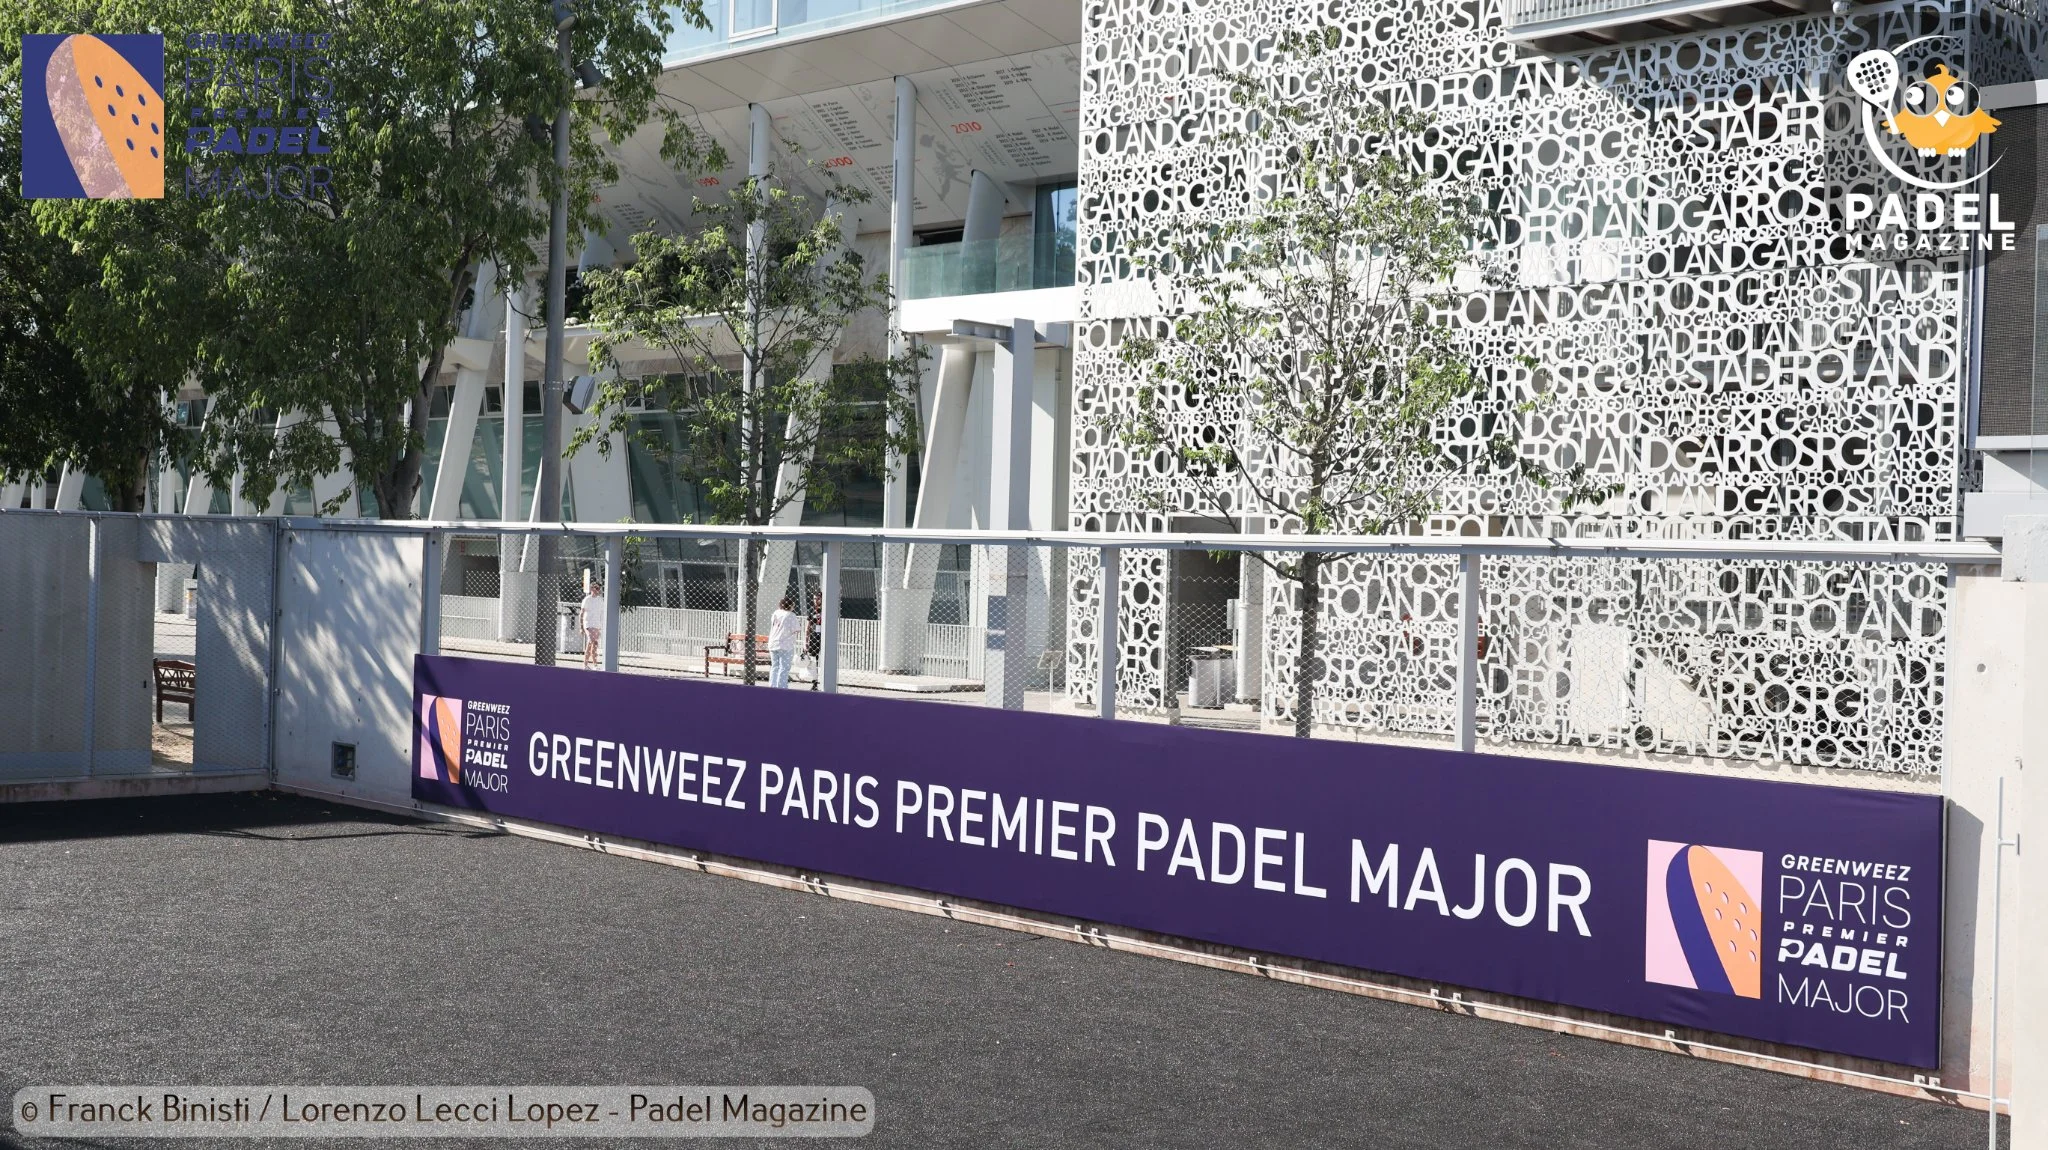 Greenweez Paris Premier Padel Major : risultati del trimestre